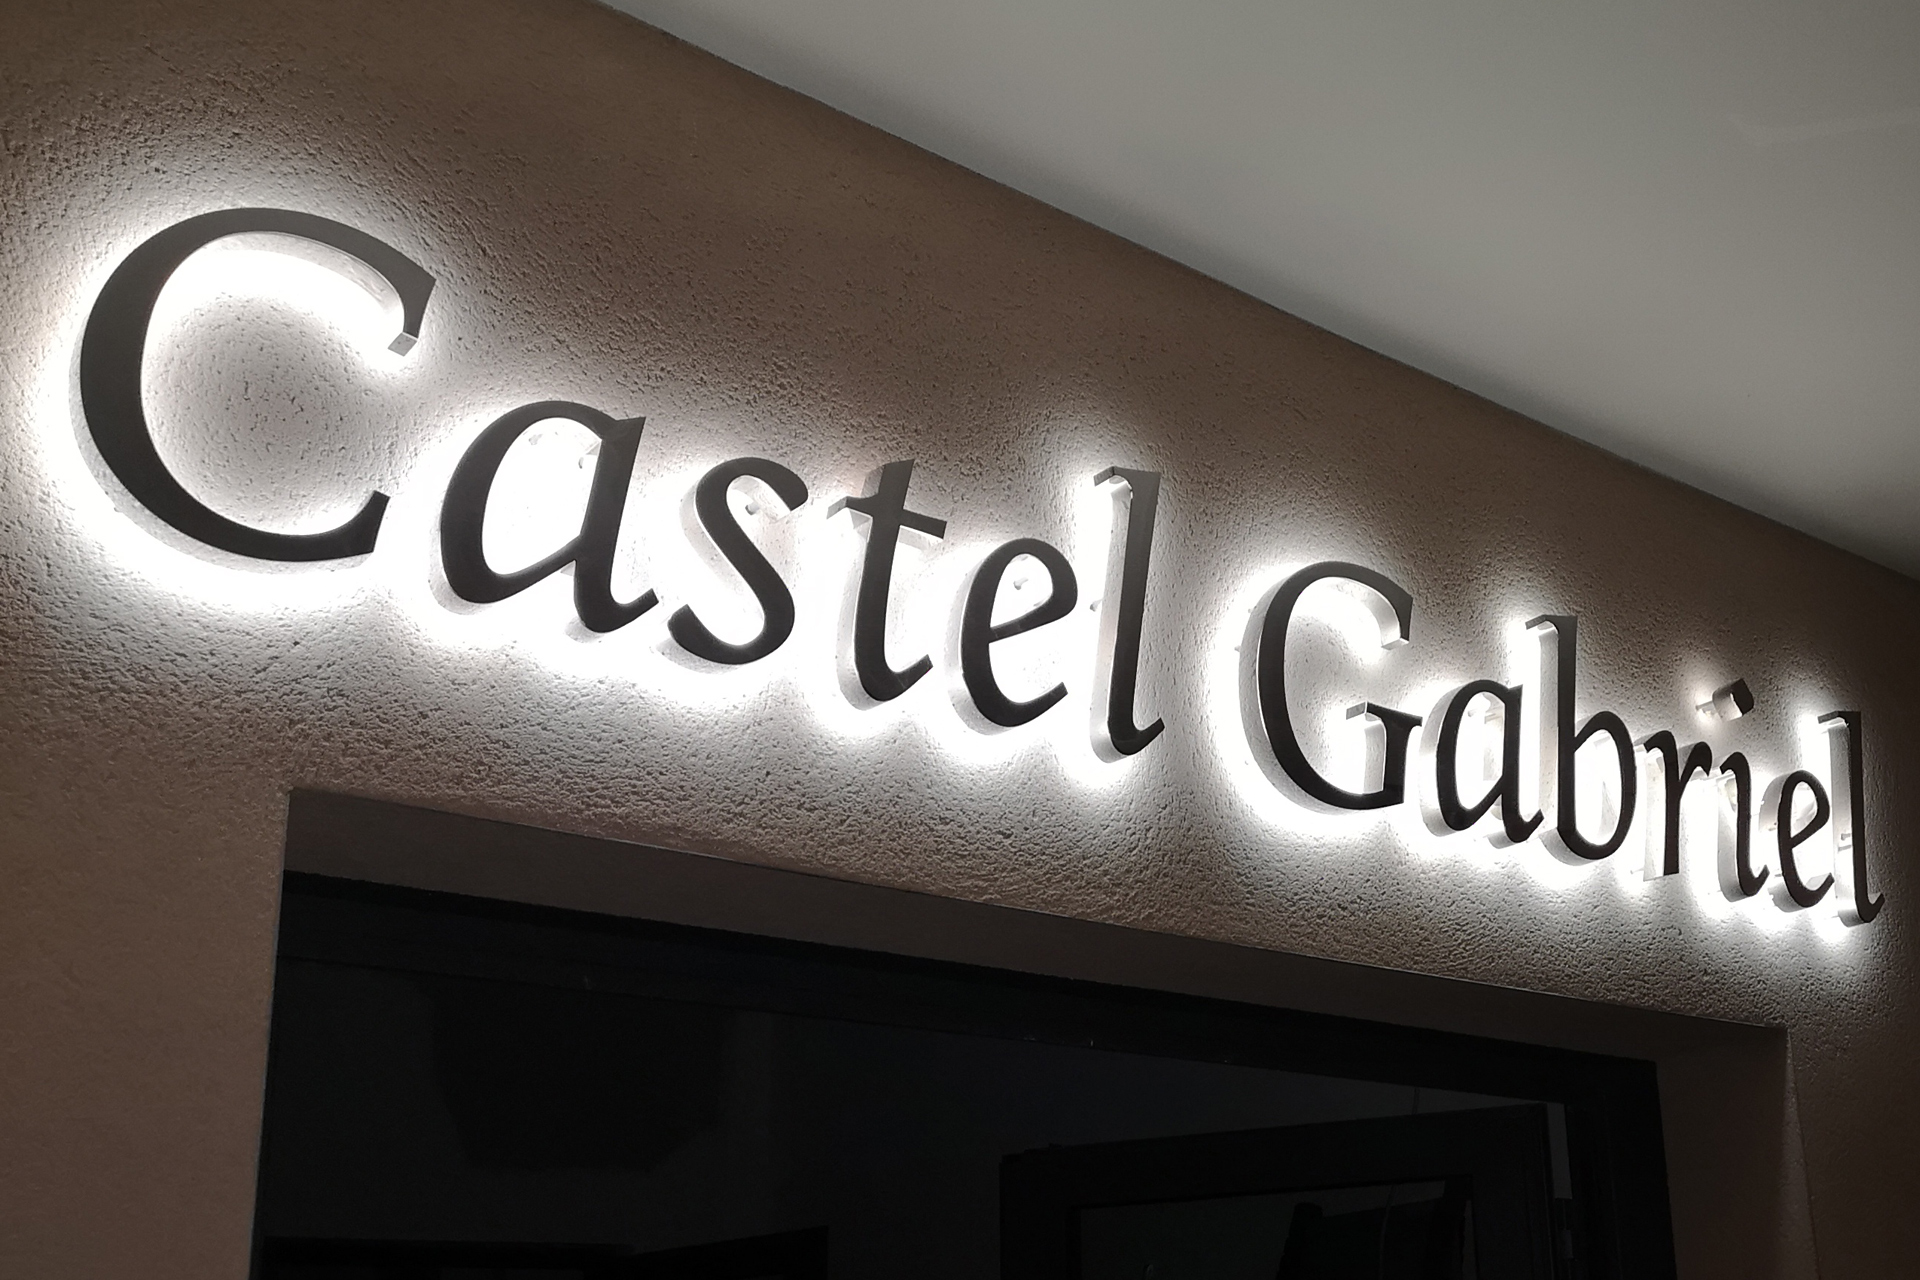 Enseigne lumineuse Castel Gabriel